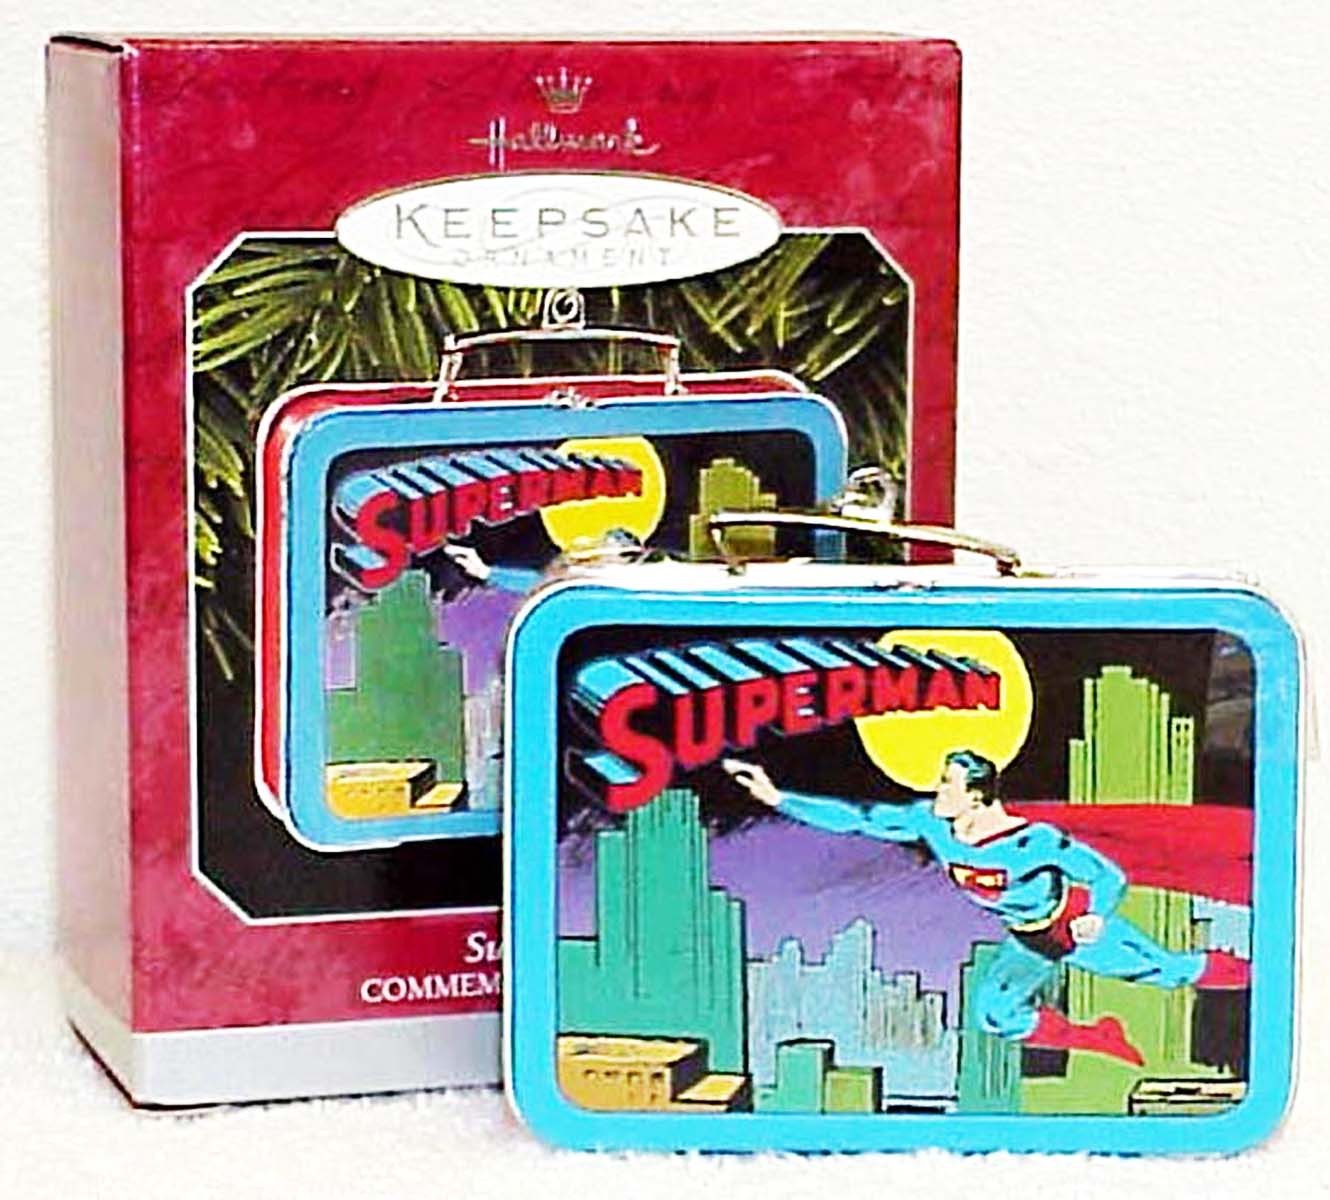 SUPERMAN LUNCH BOX - 1998 Hallmark Keepsake Ornament # QX6423 Excellent! - $12.00